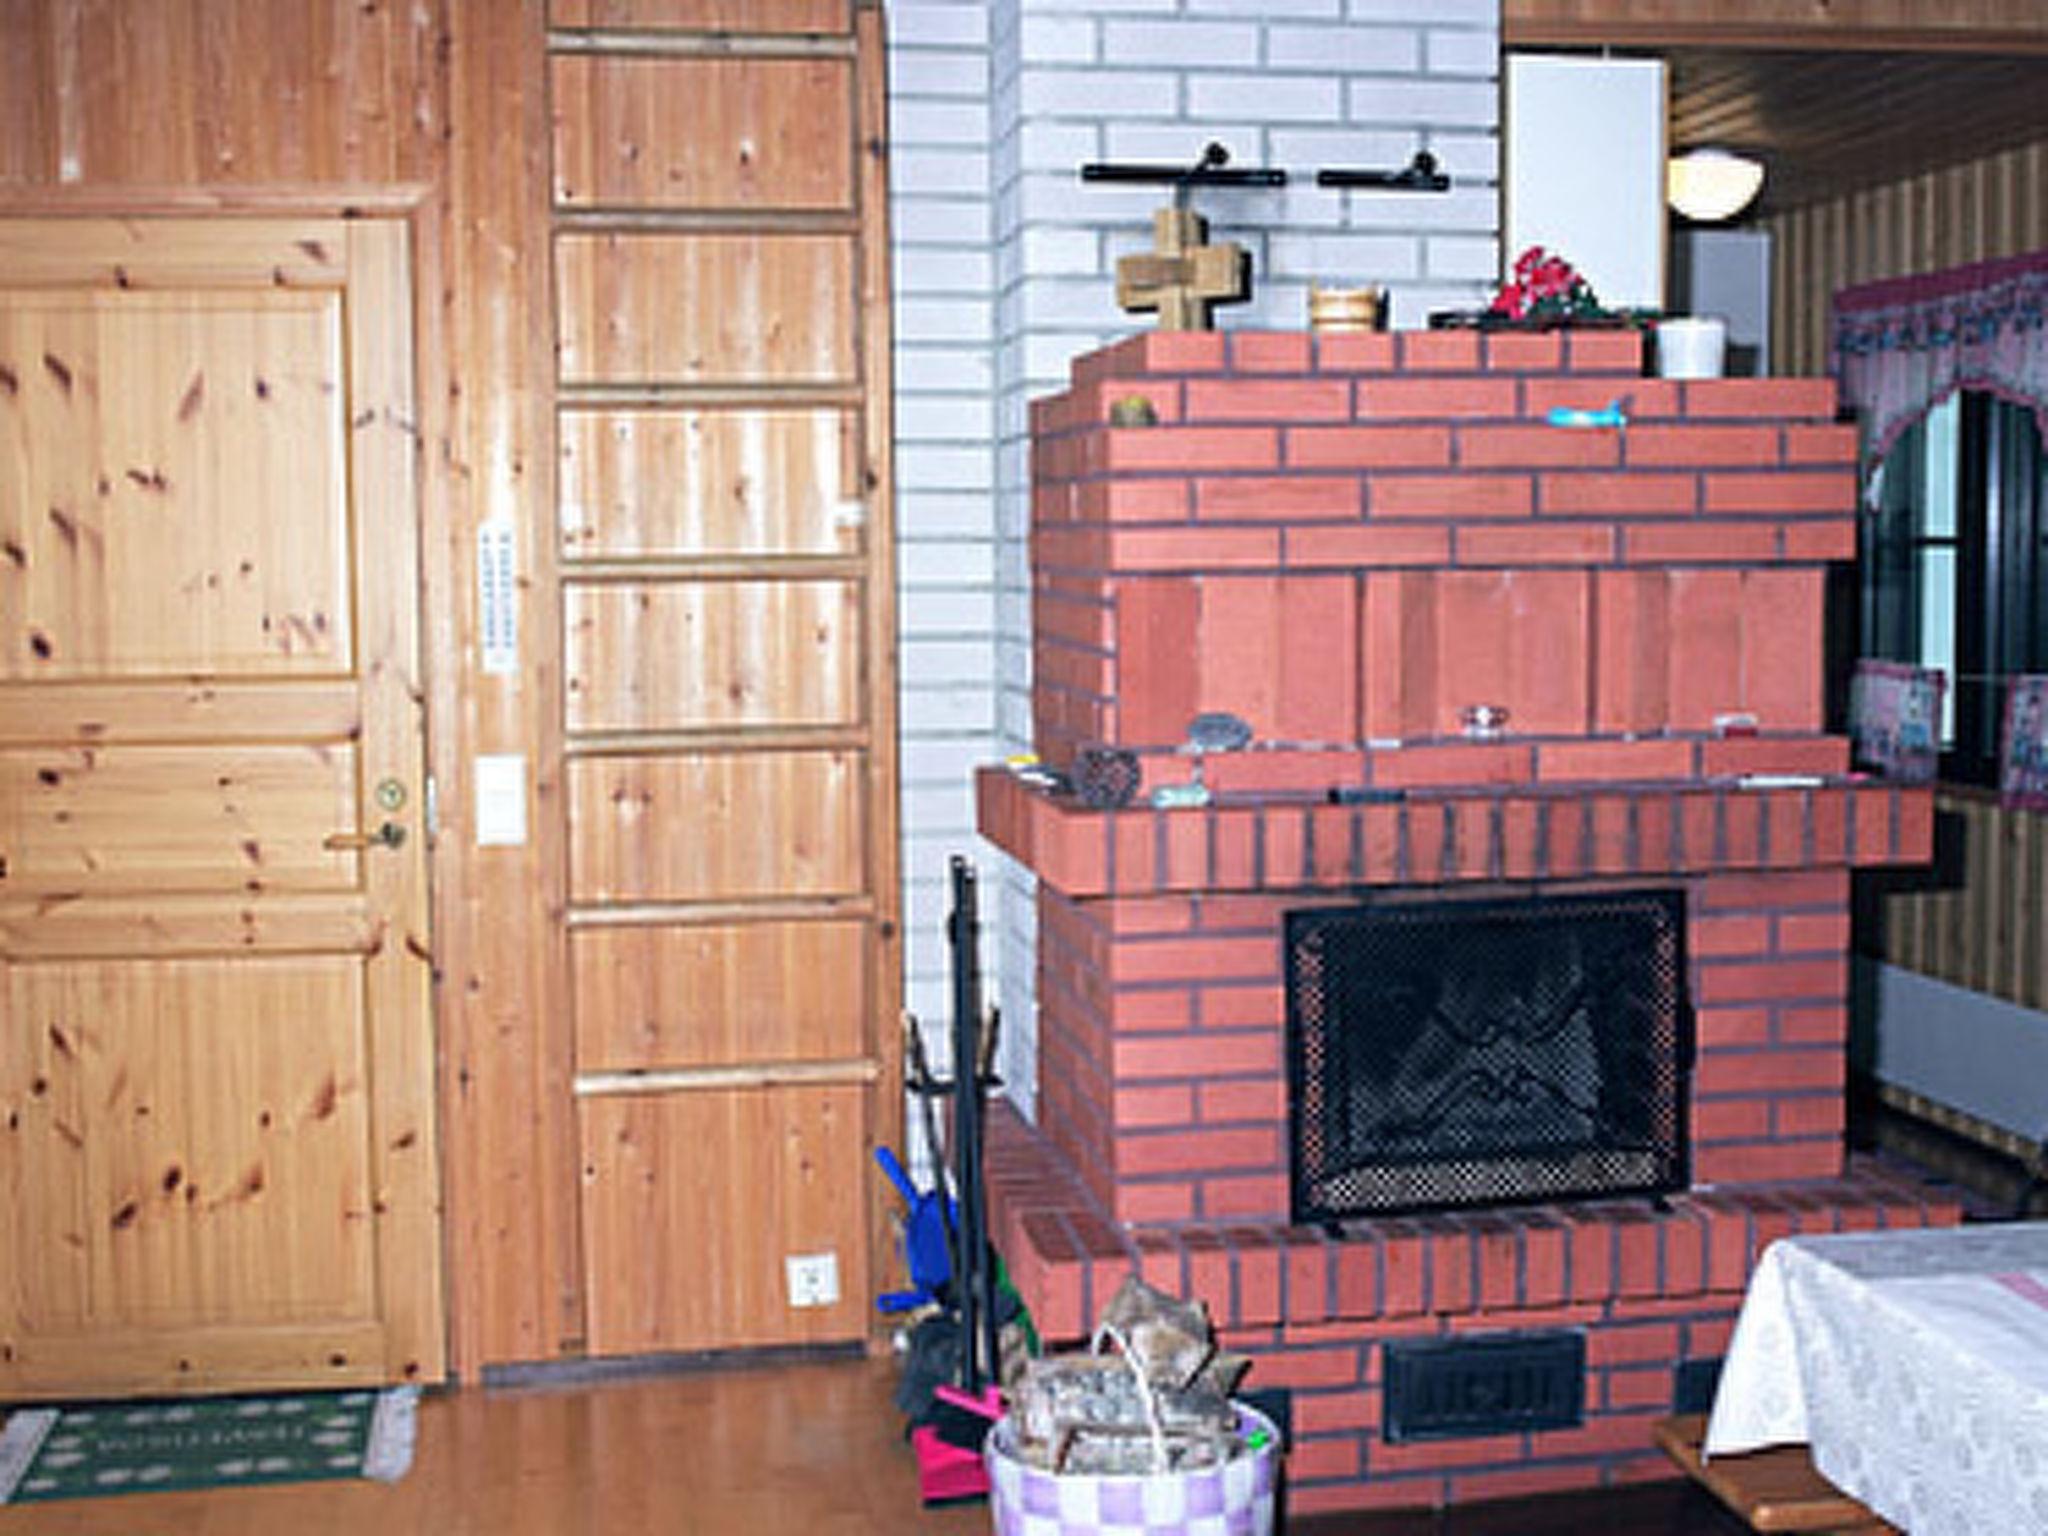 Photo 7 - 2 bedroom House in Hyrynsalmi with sauna